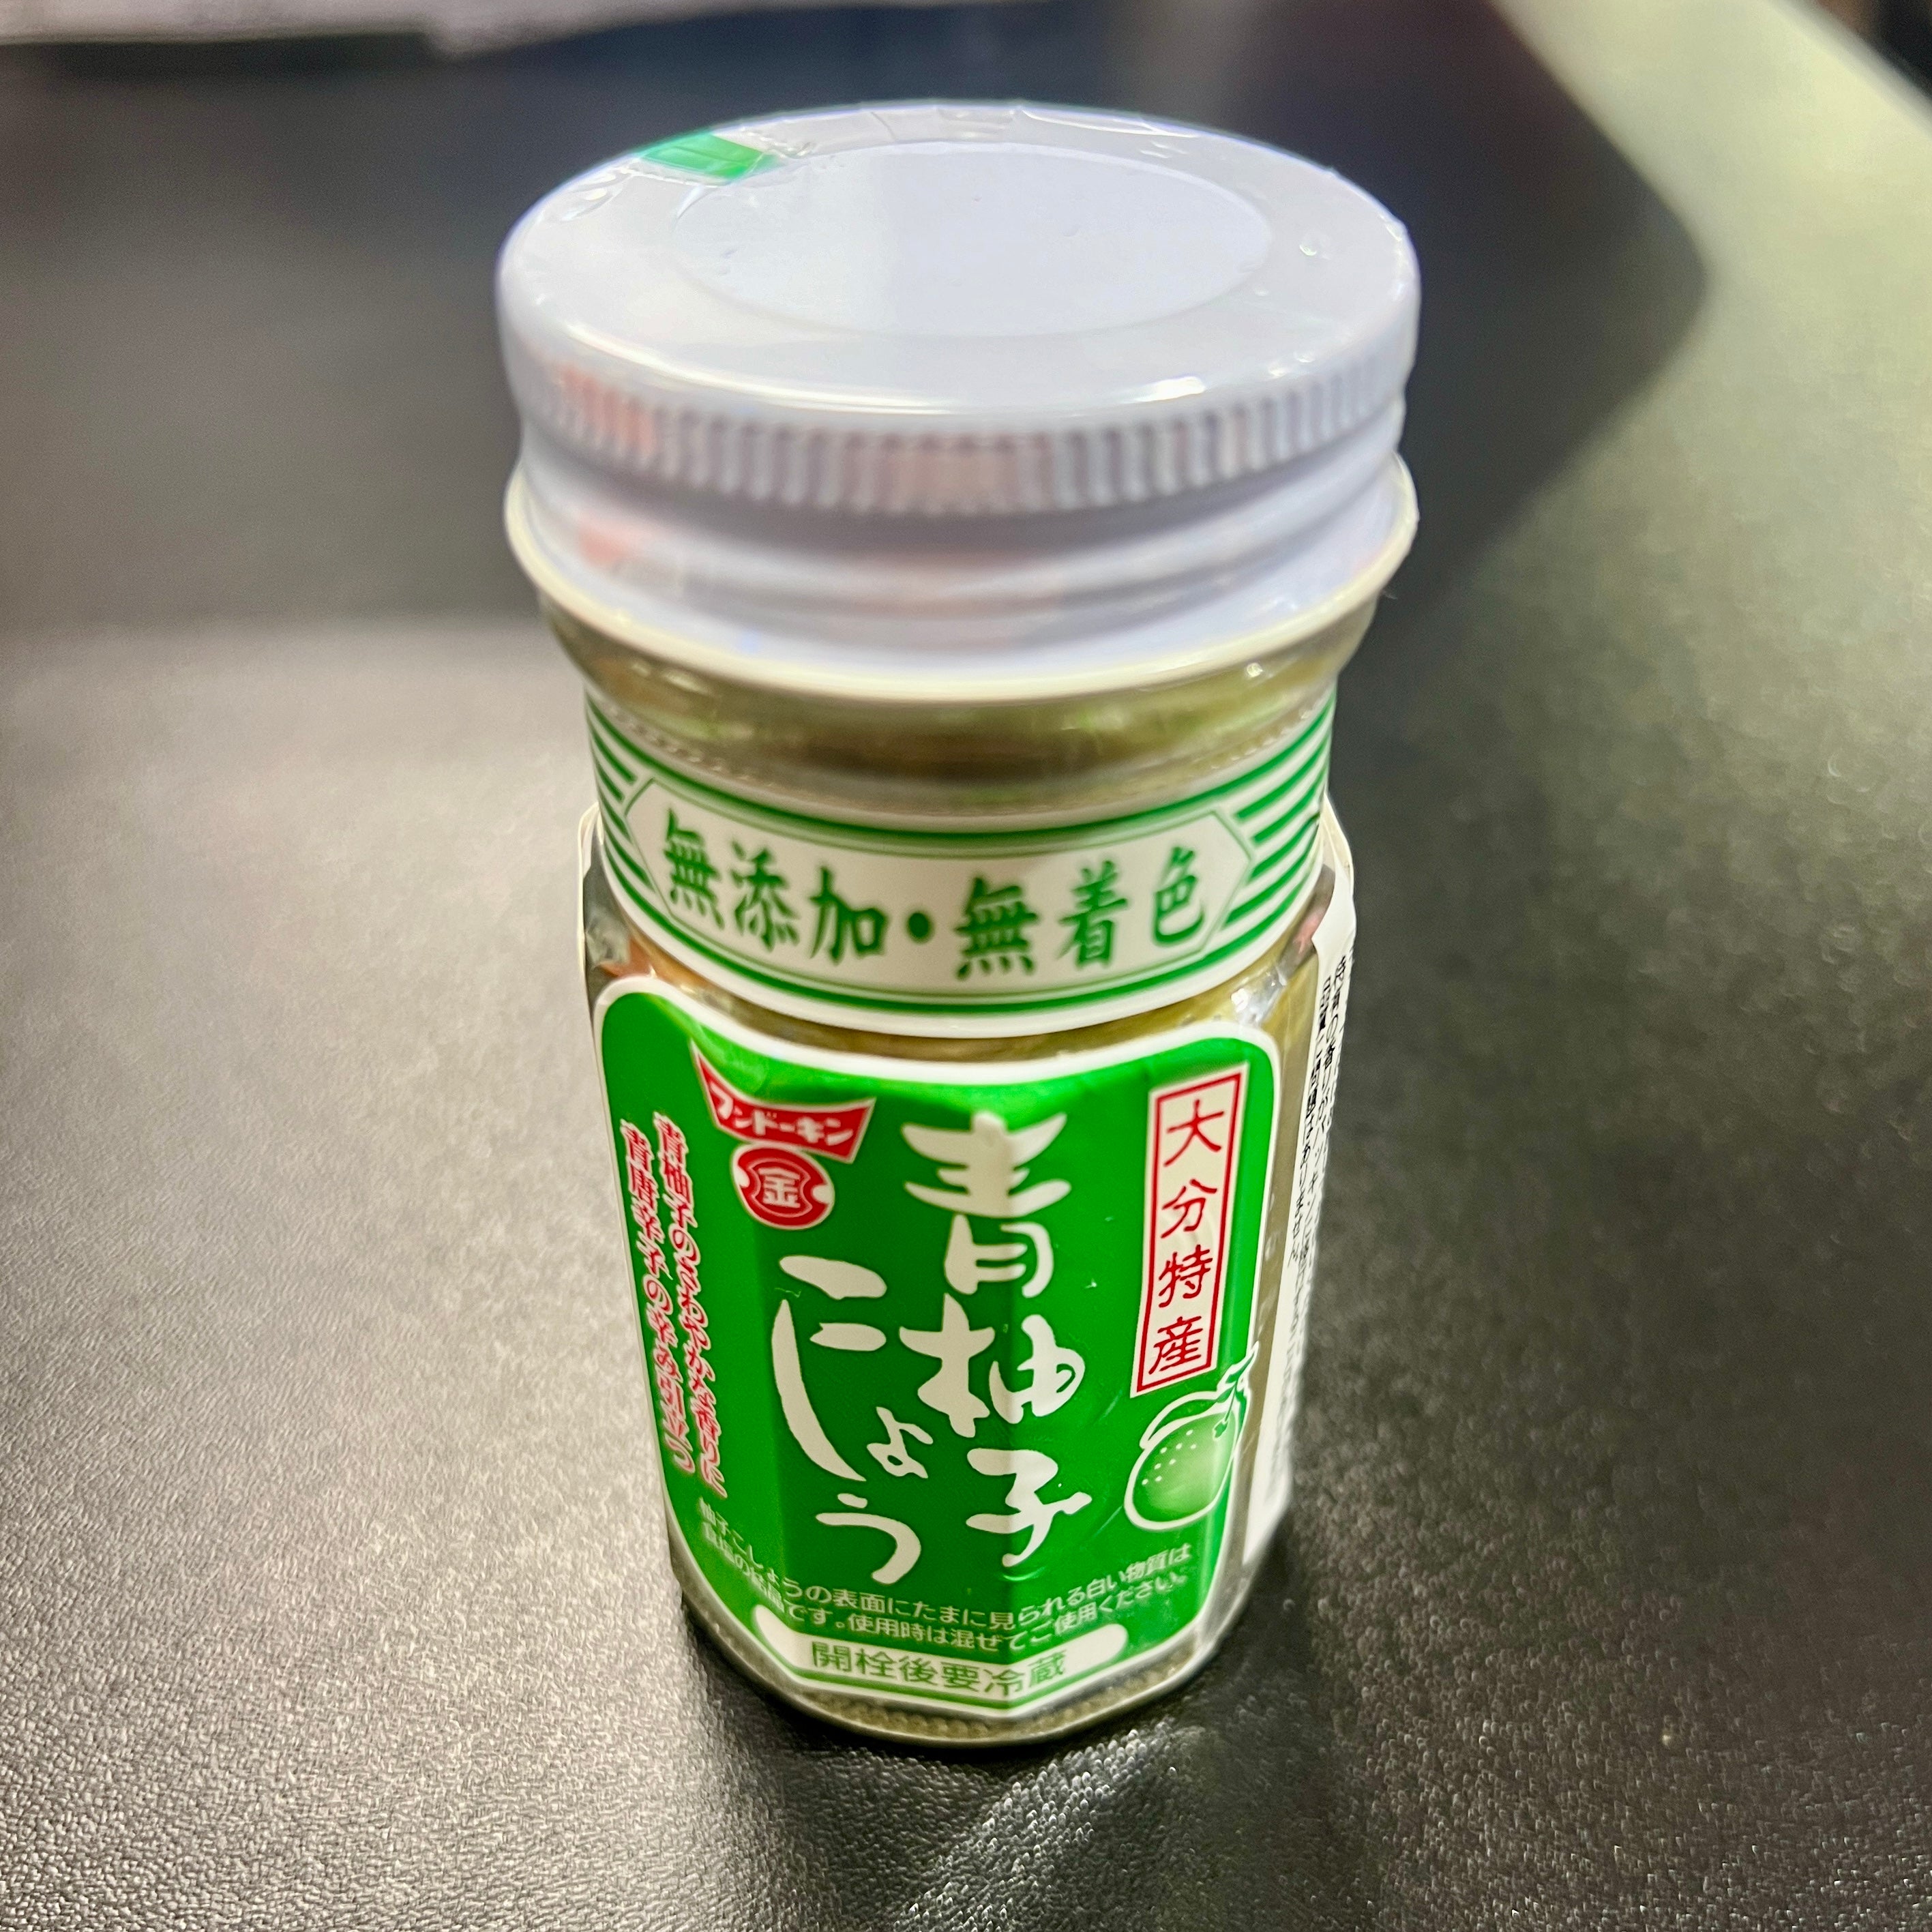 Ao Yuzu Kosho 50g  (Green citrus chili paste)